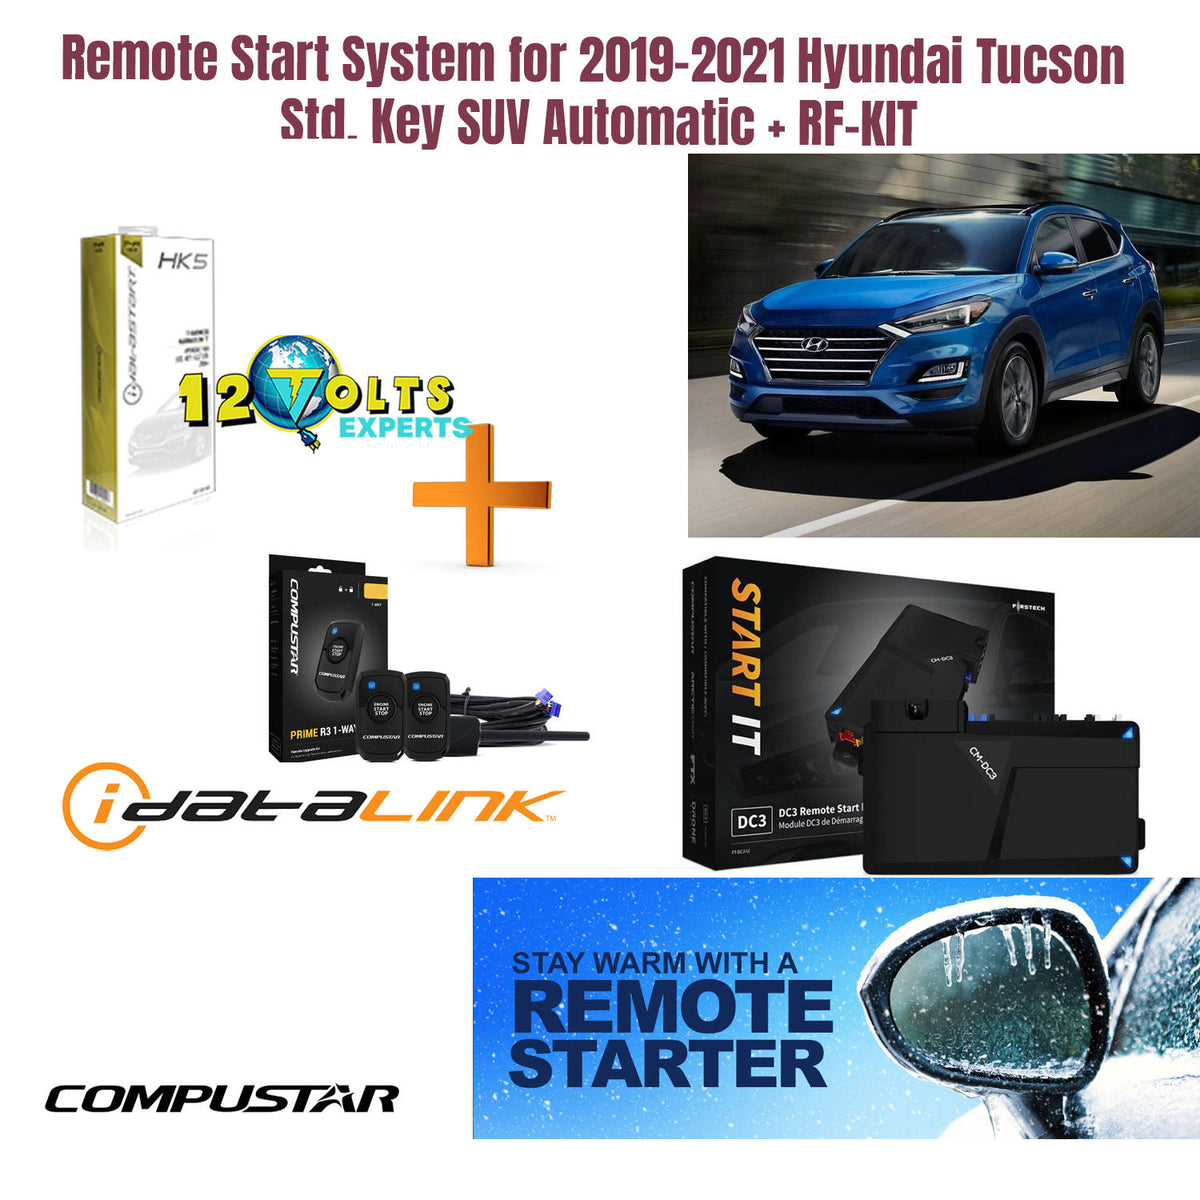 Remote Start System for 2019-2021 Hyundai Tucson Std. Key SUV Automatic + RF-KIT